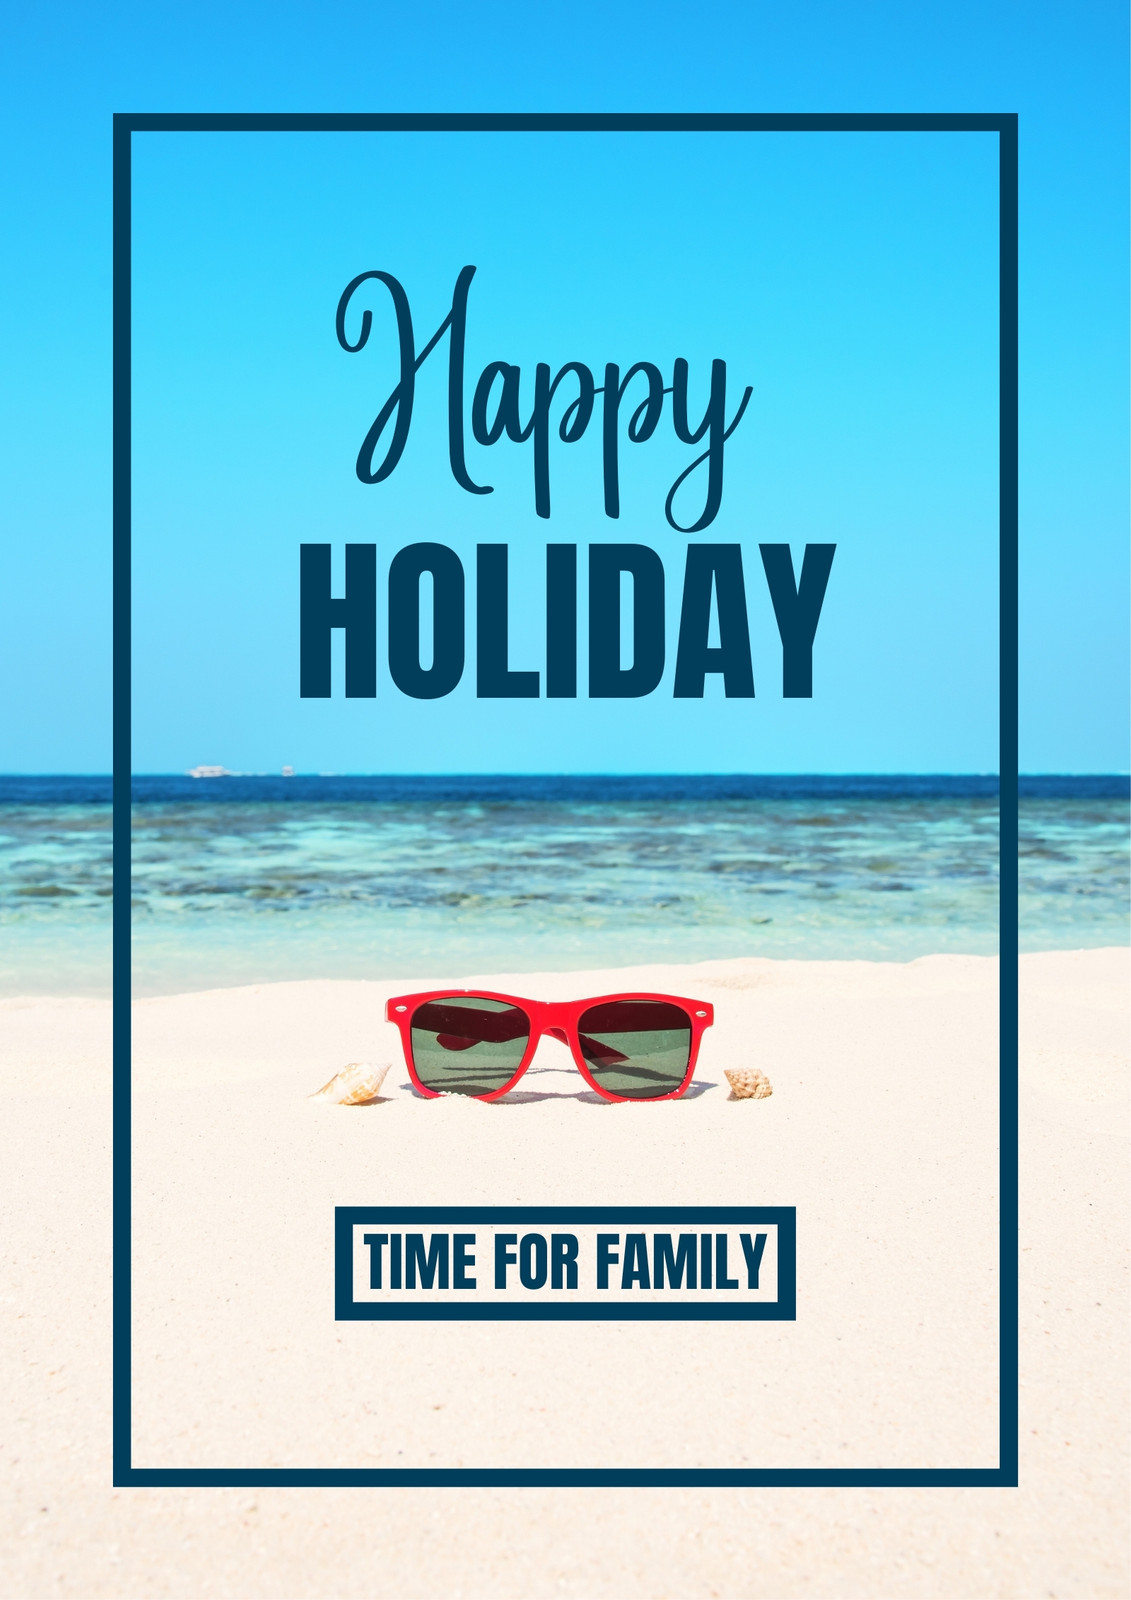 Free and customizable holiday wishlist templates